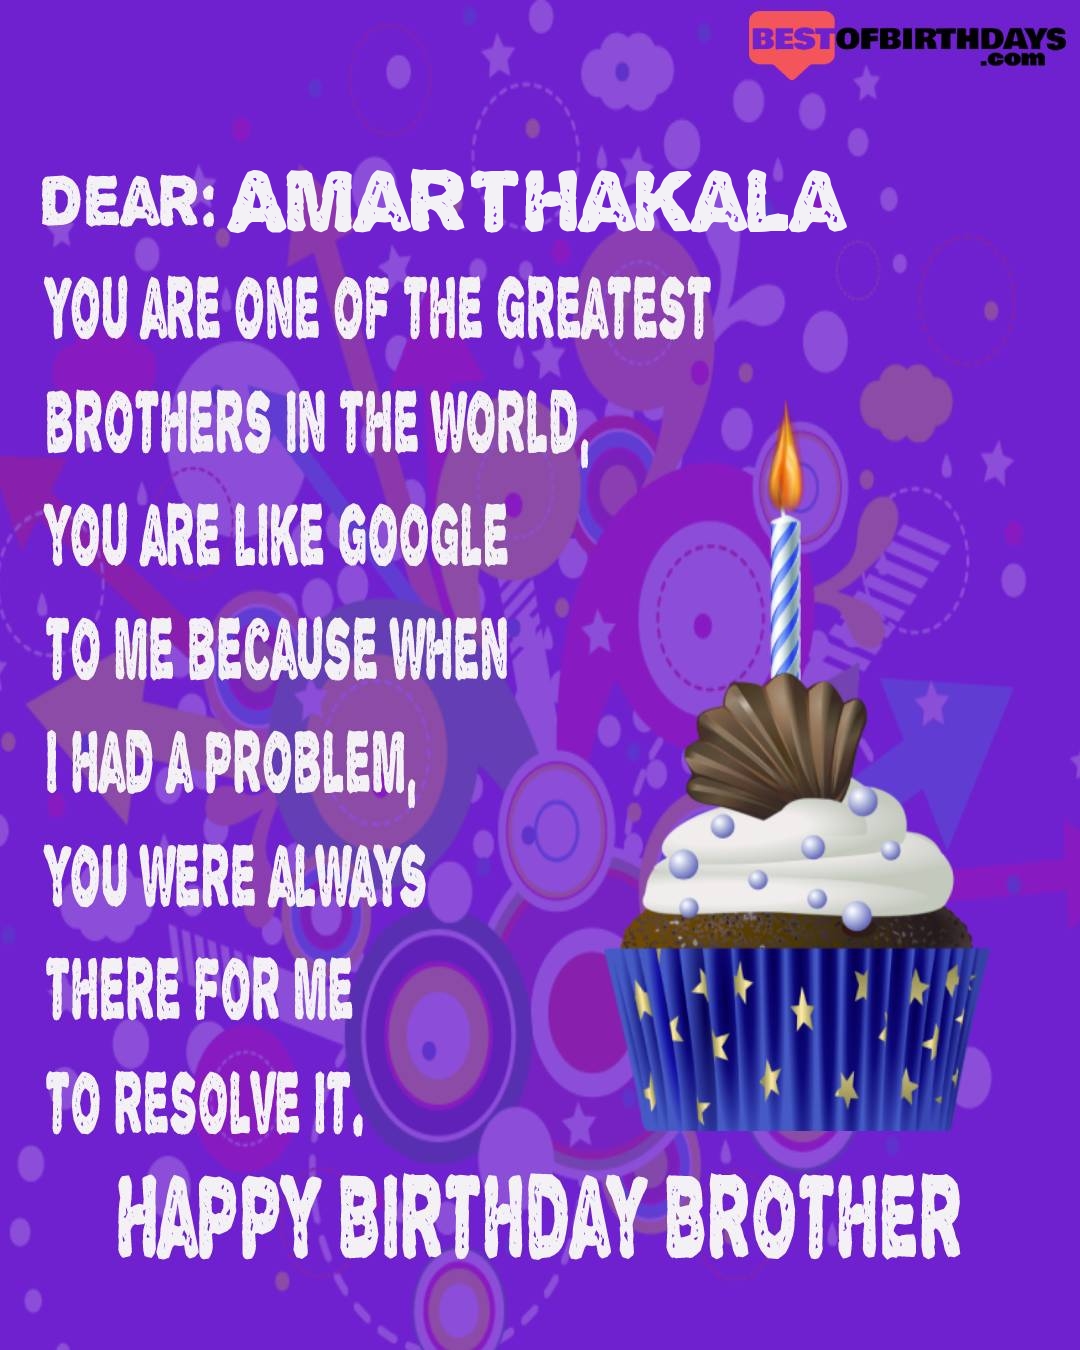 Happy birthday amarthakala bhai brother bro